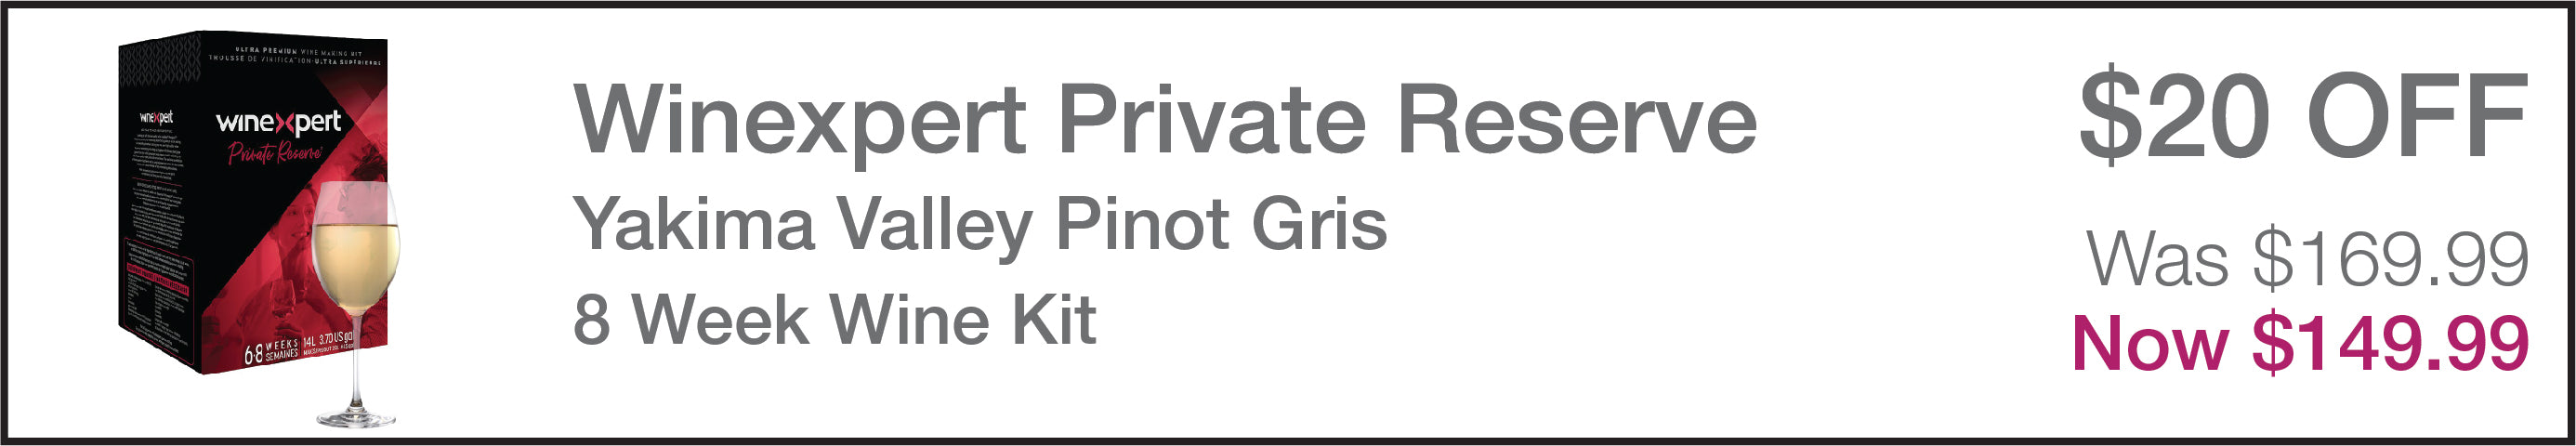 Winexpert Private Reserve Yakima Valley Pinot Gris